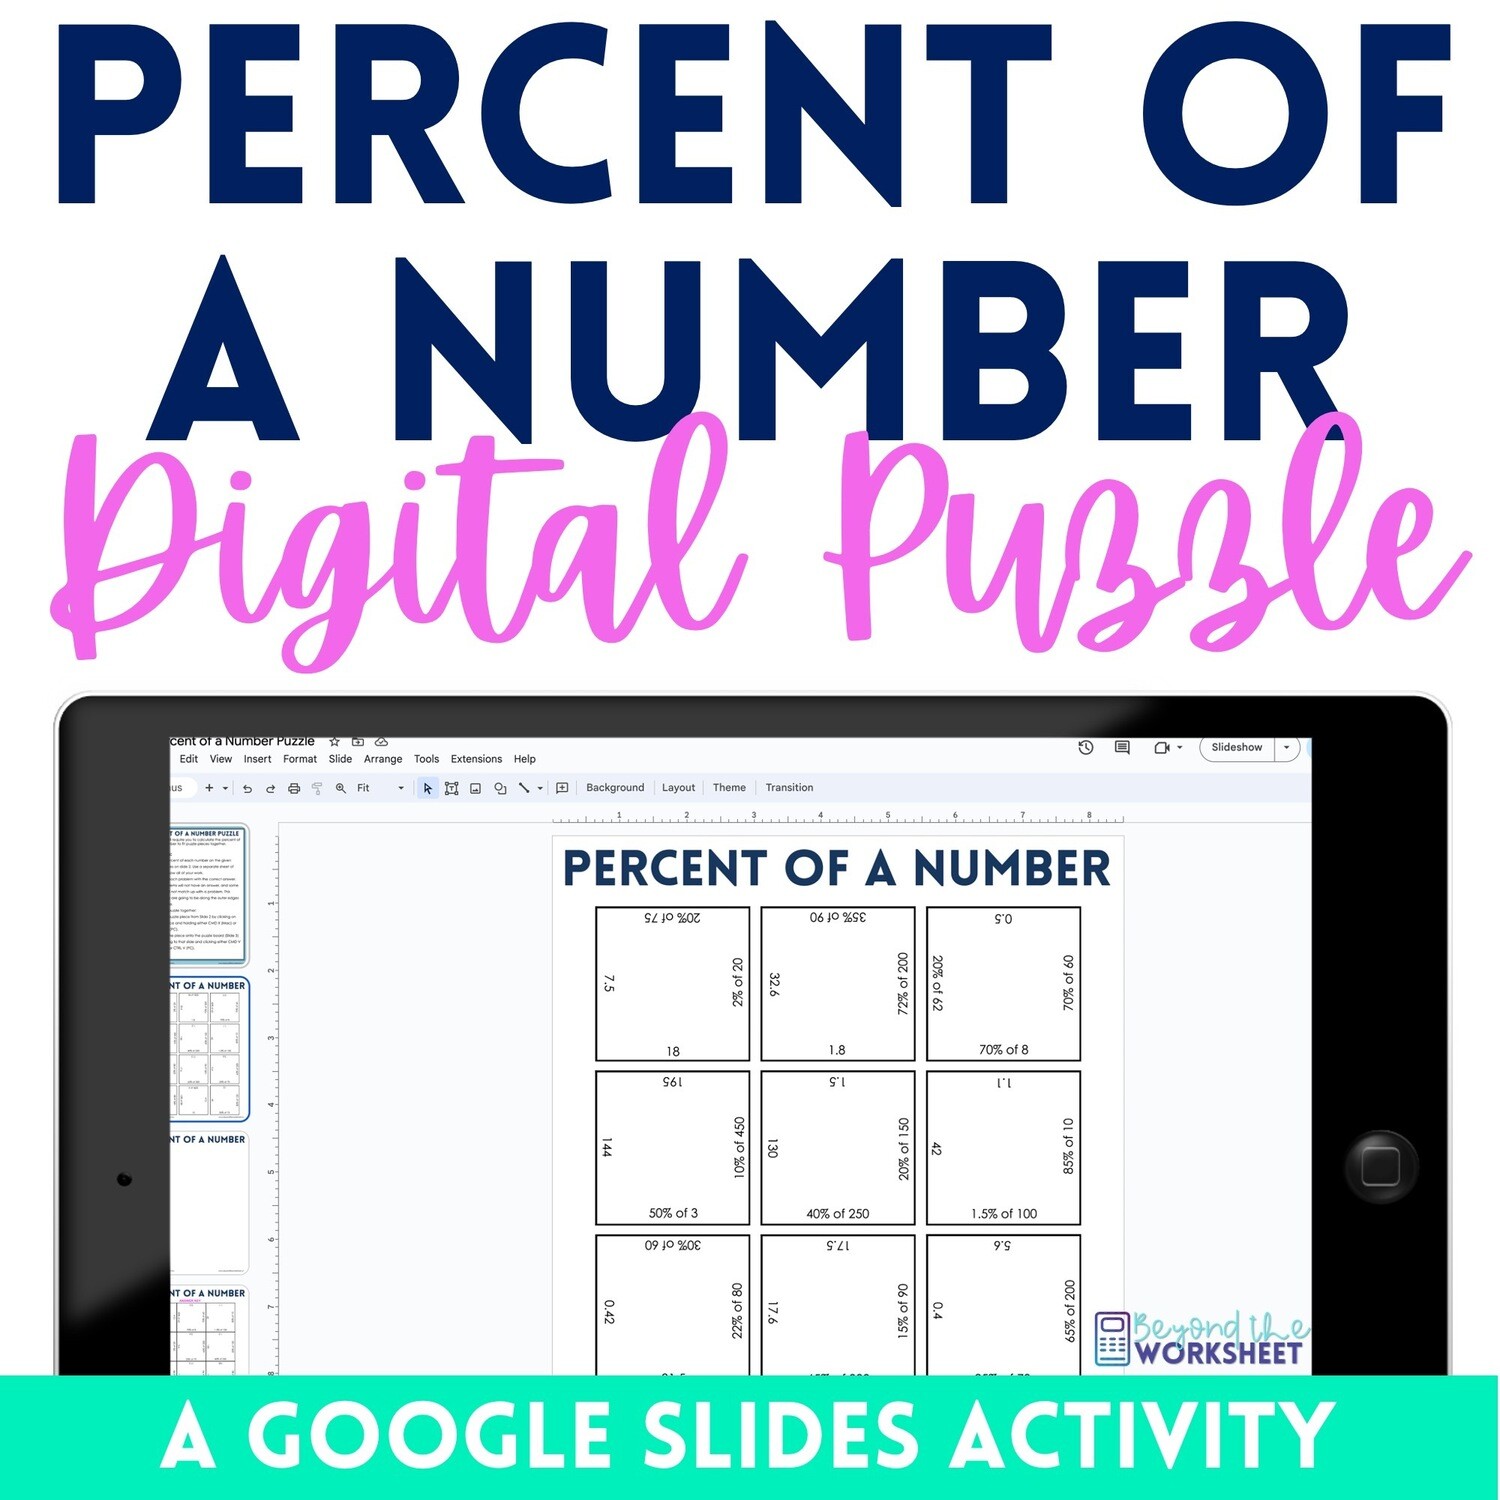 Percent of a Number Digital Puzzle